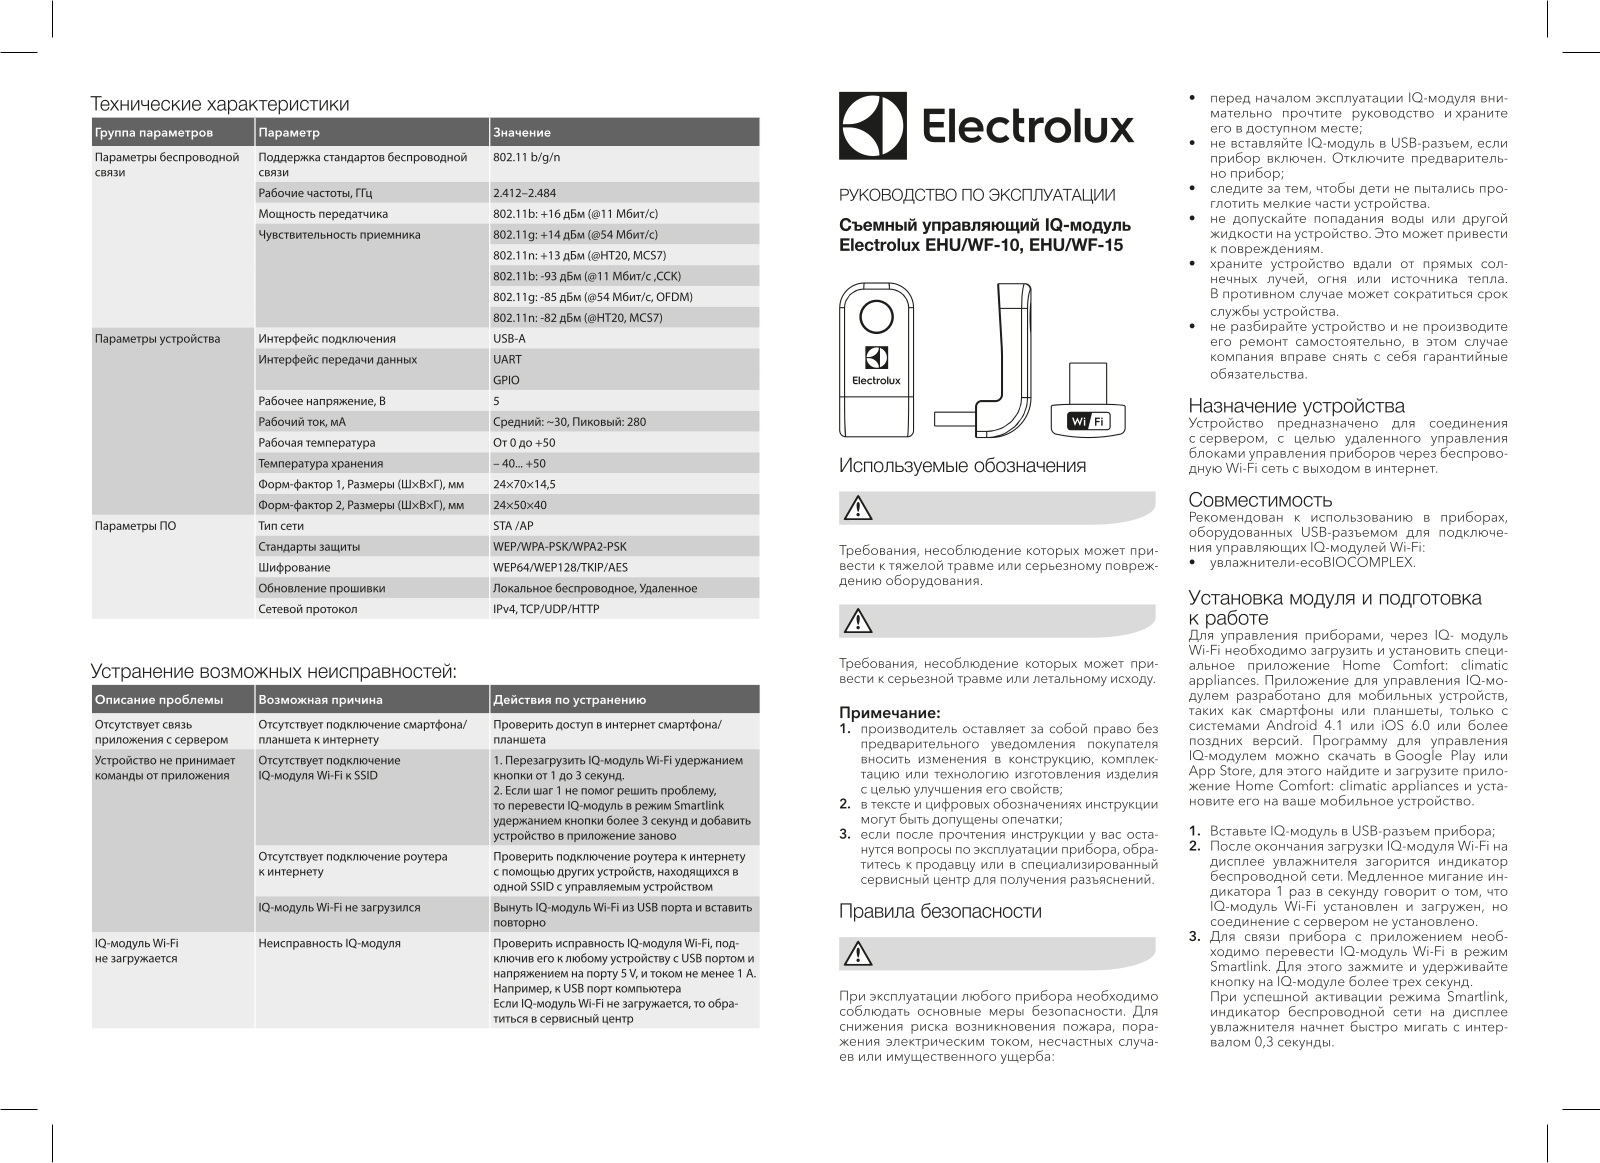 Electrolux EHU-WF-15 User Manual